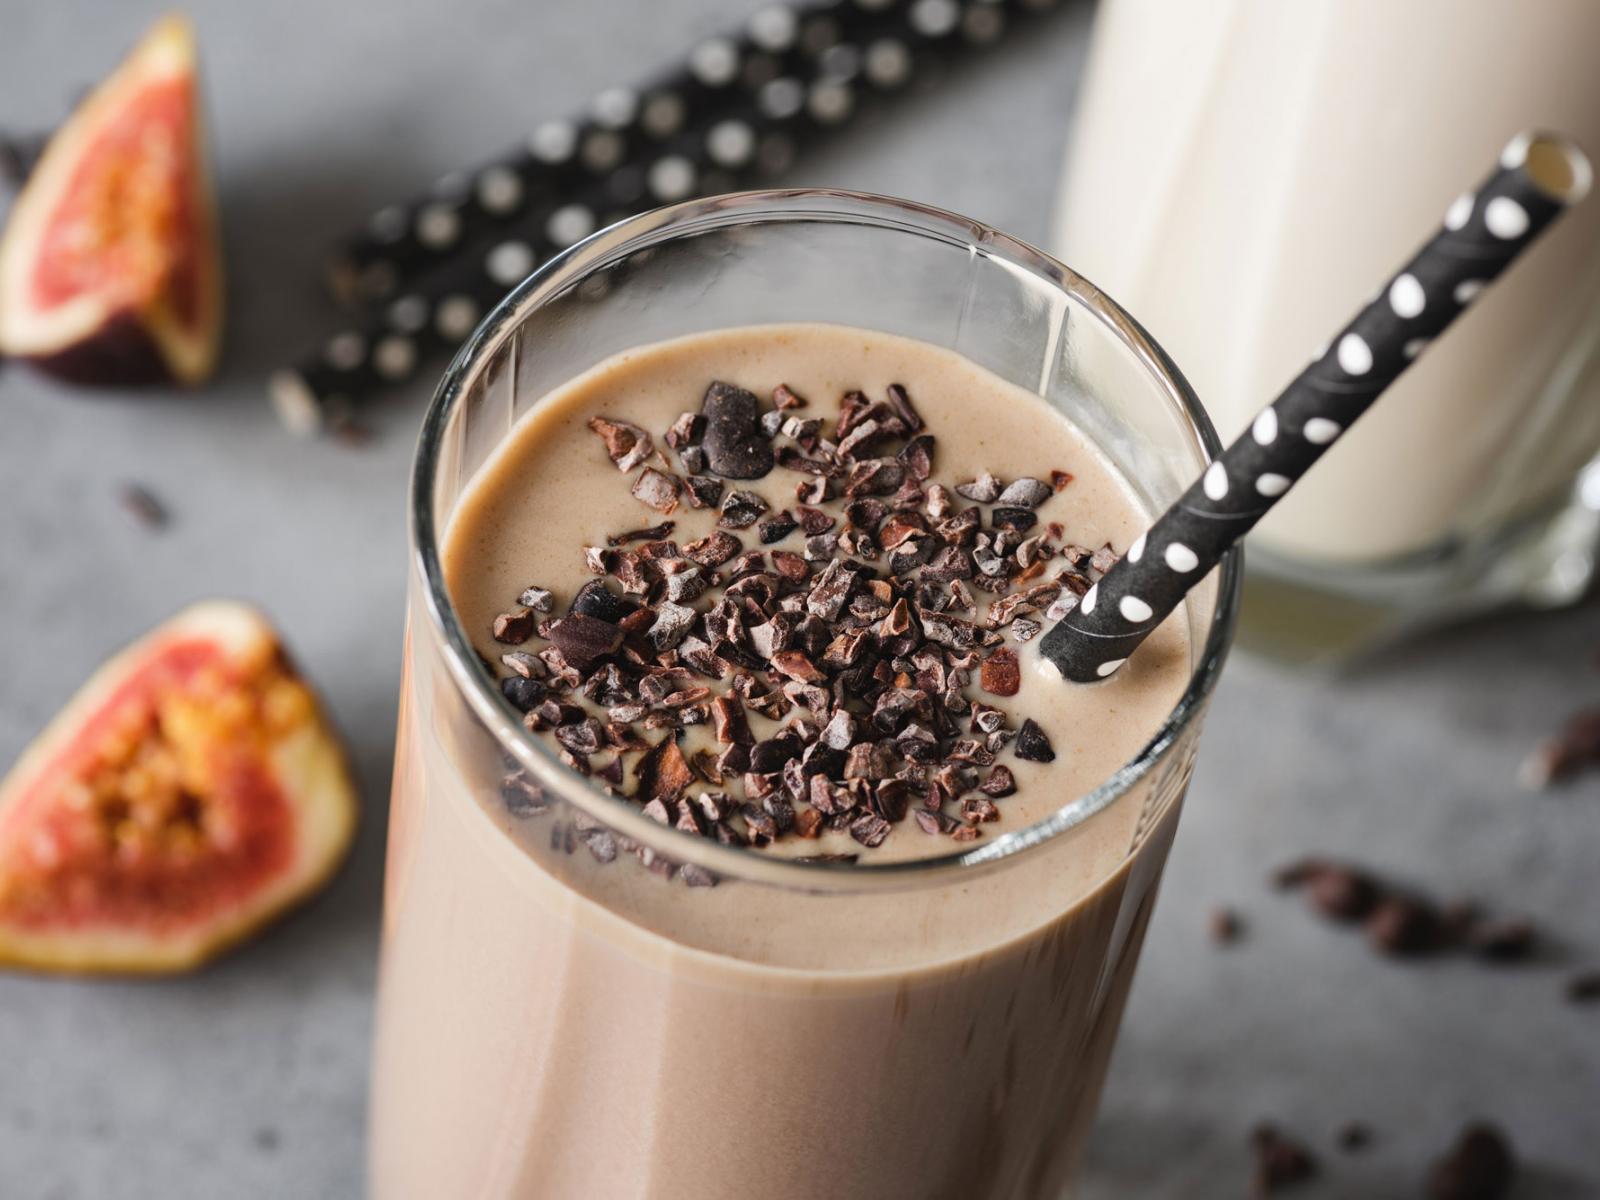 Farmers Low-Fat 1% Chocolate Milk Smoothie Recipe